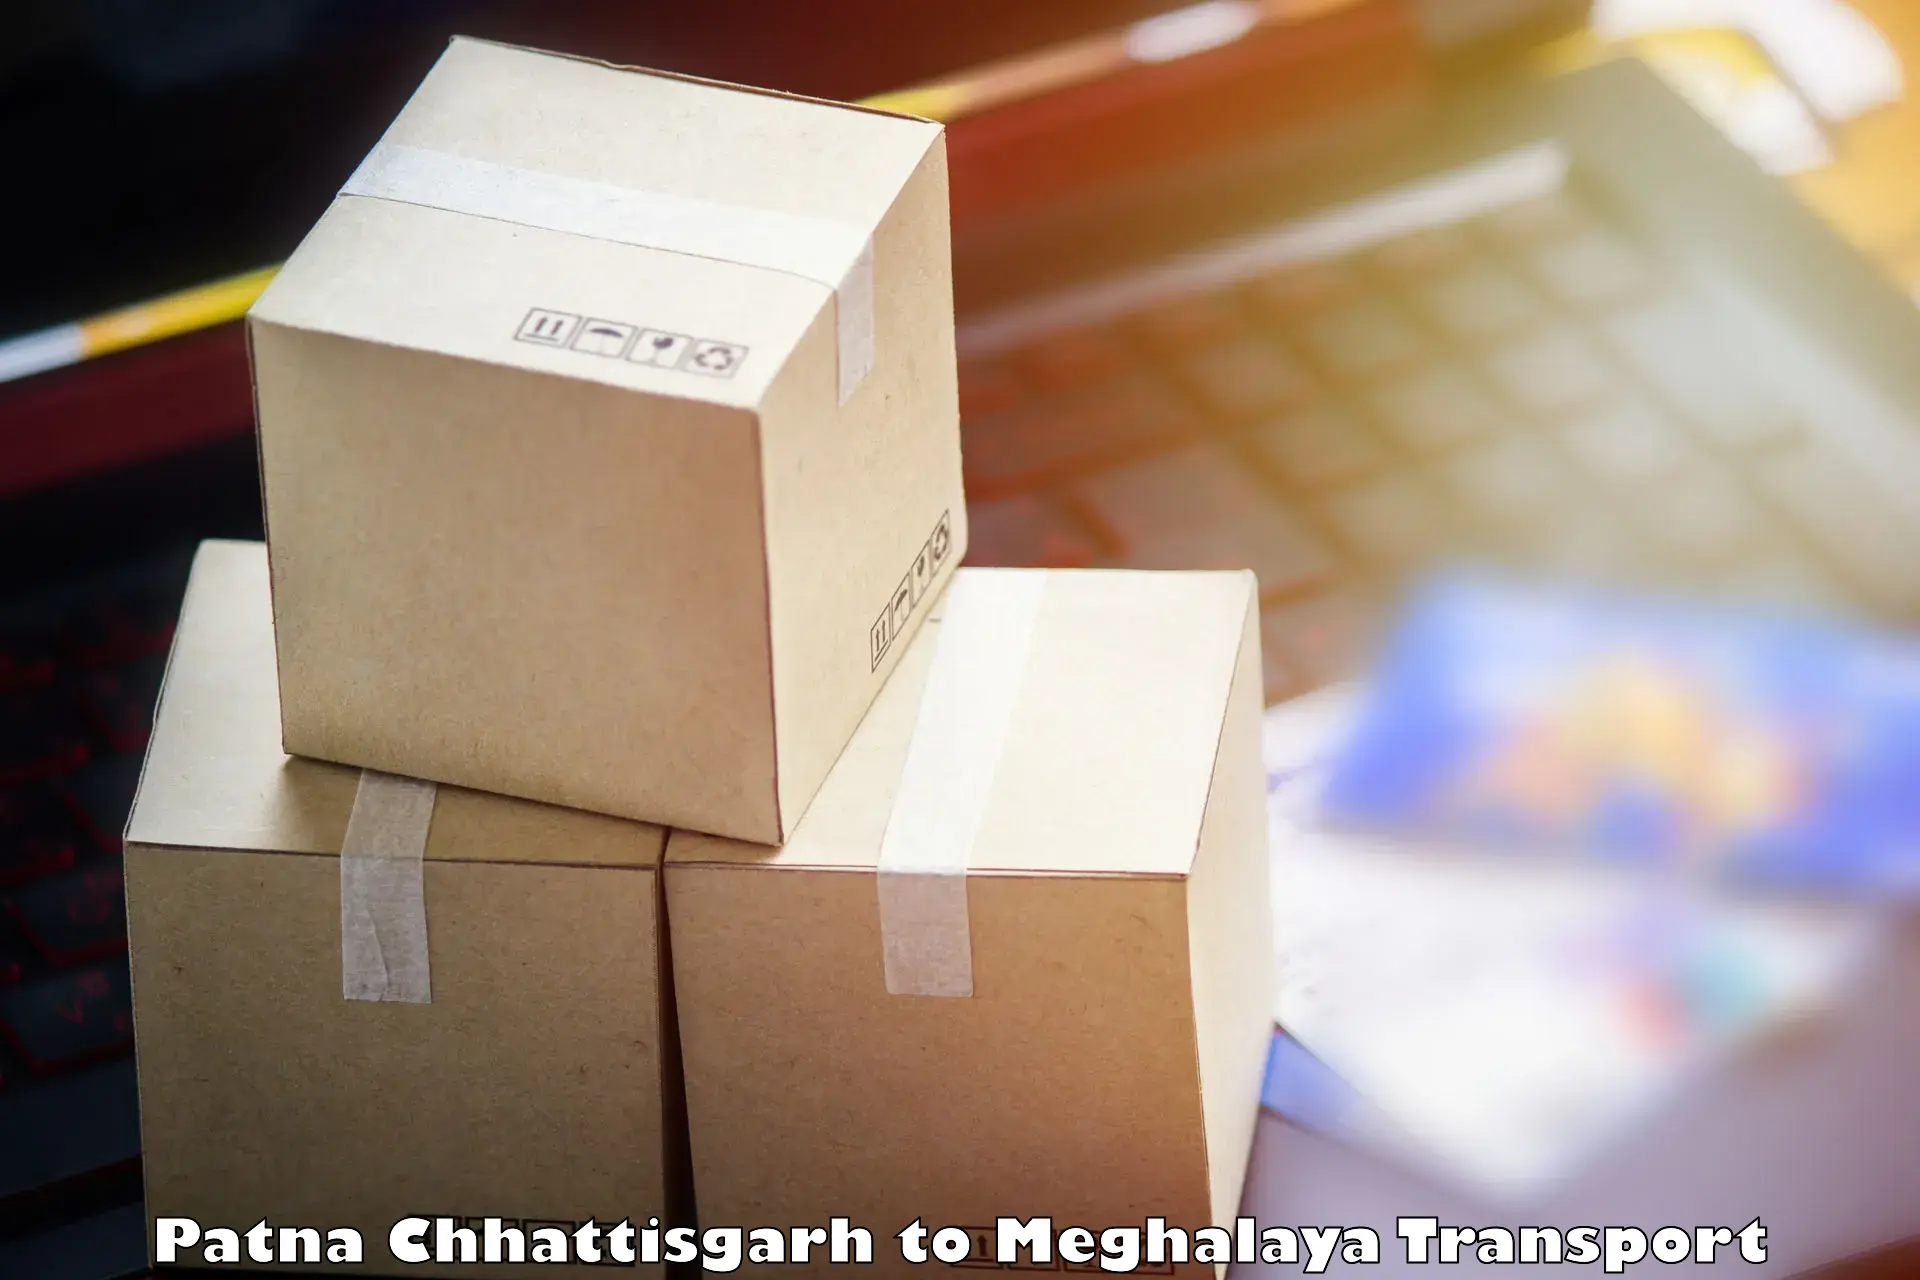 Delivery service Patna Chhattisgarh to Umsaw